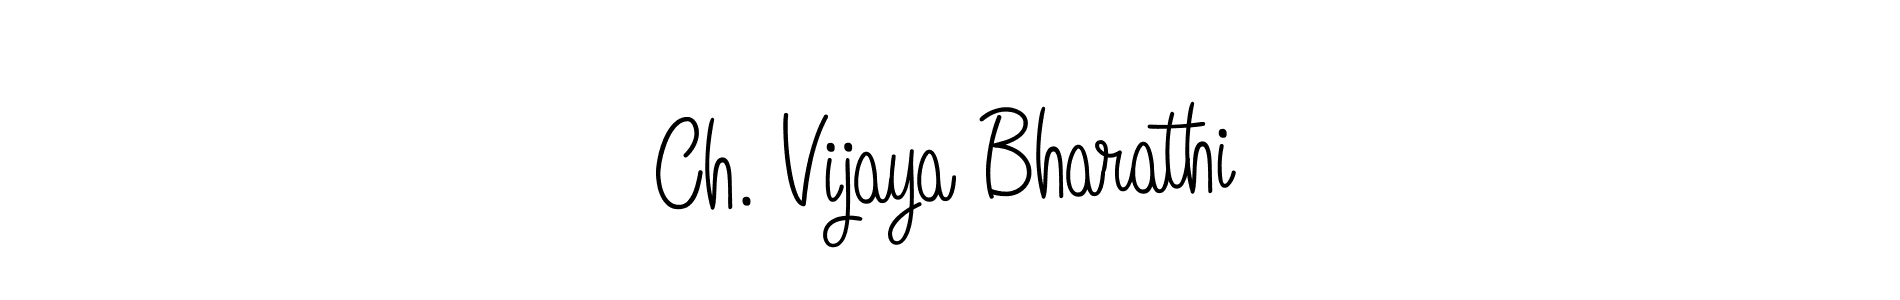 94+ Ch. Vijaya Bharathi Name Signature Style Ideas | Professional ...